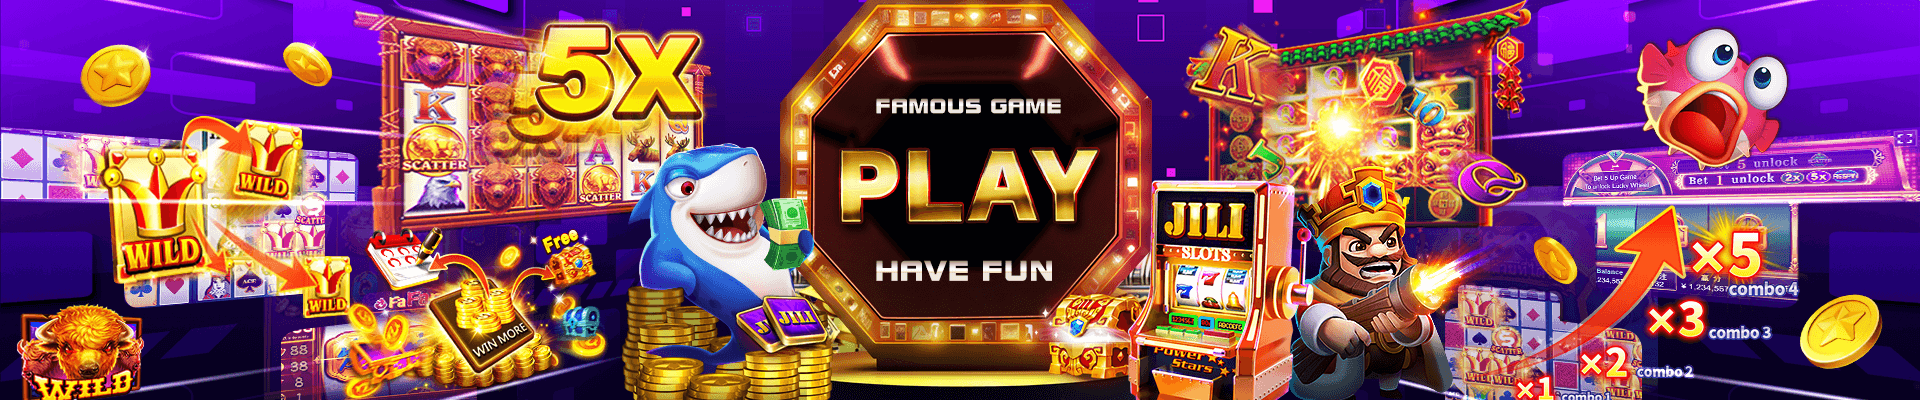 Playfino - Play Famous Play